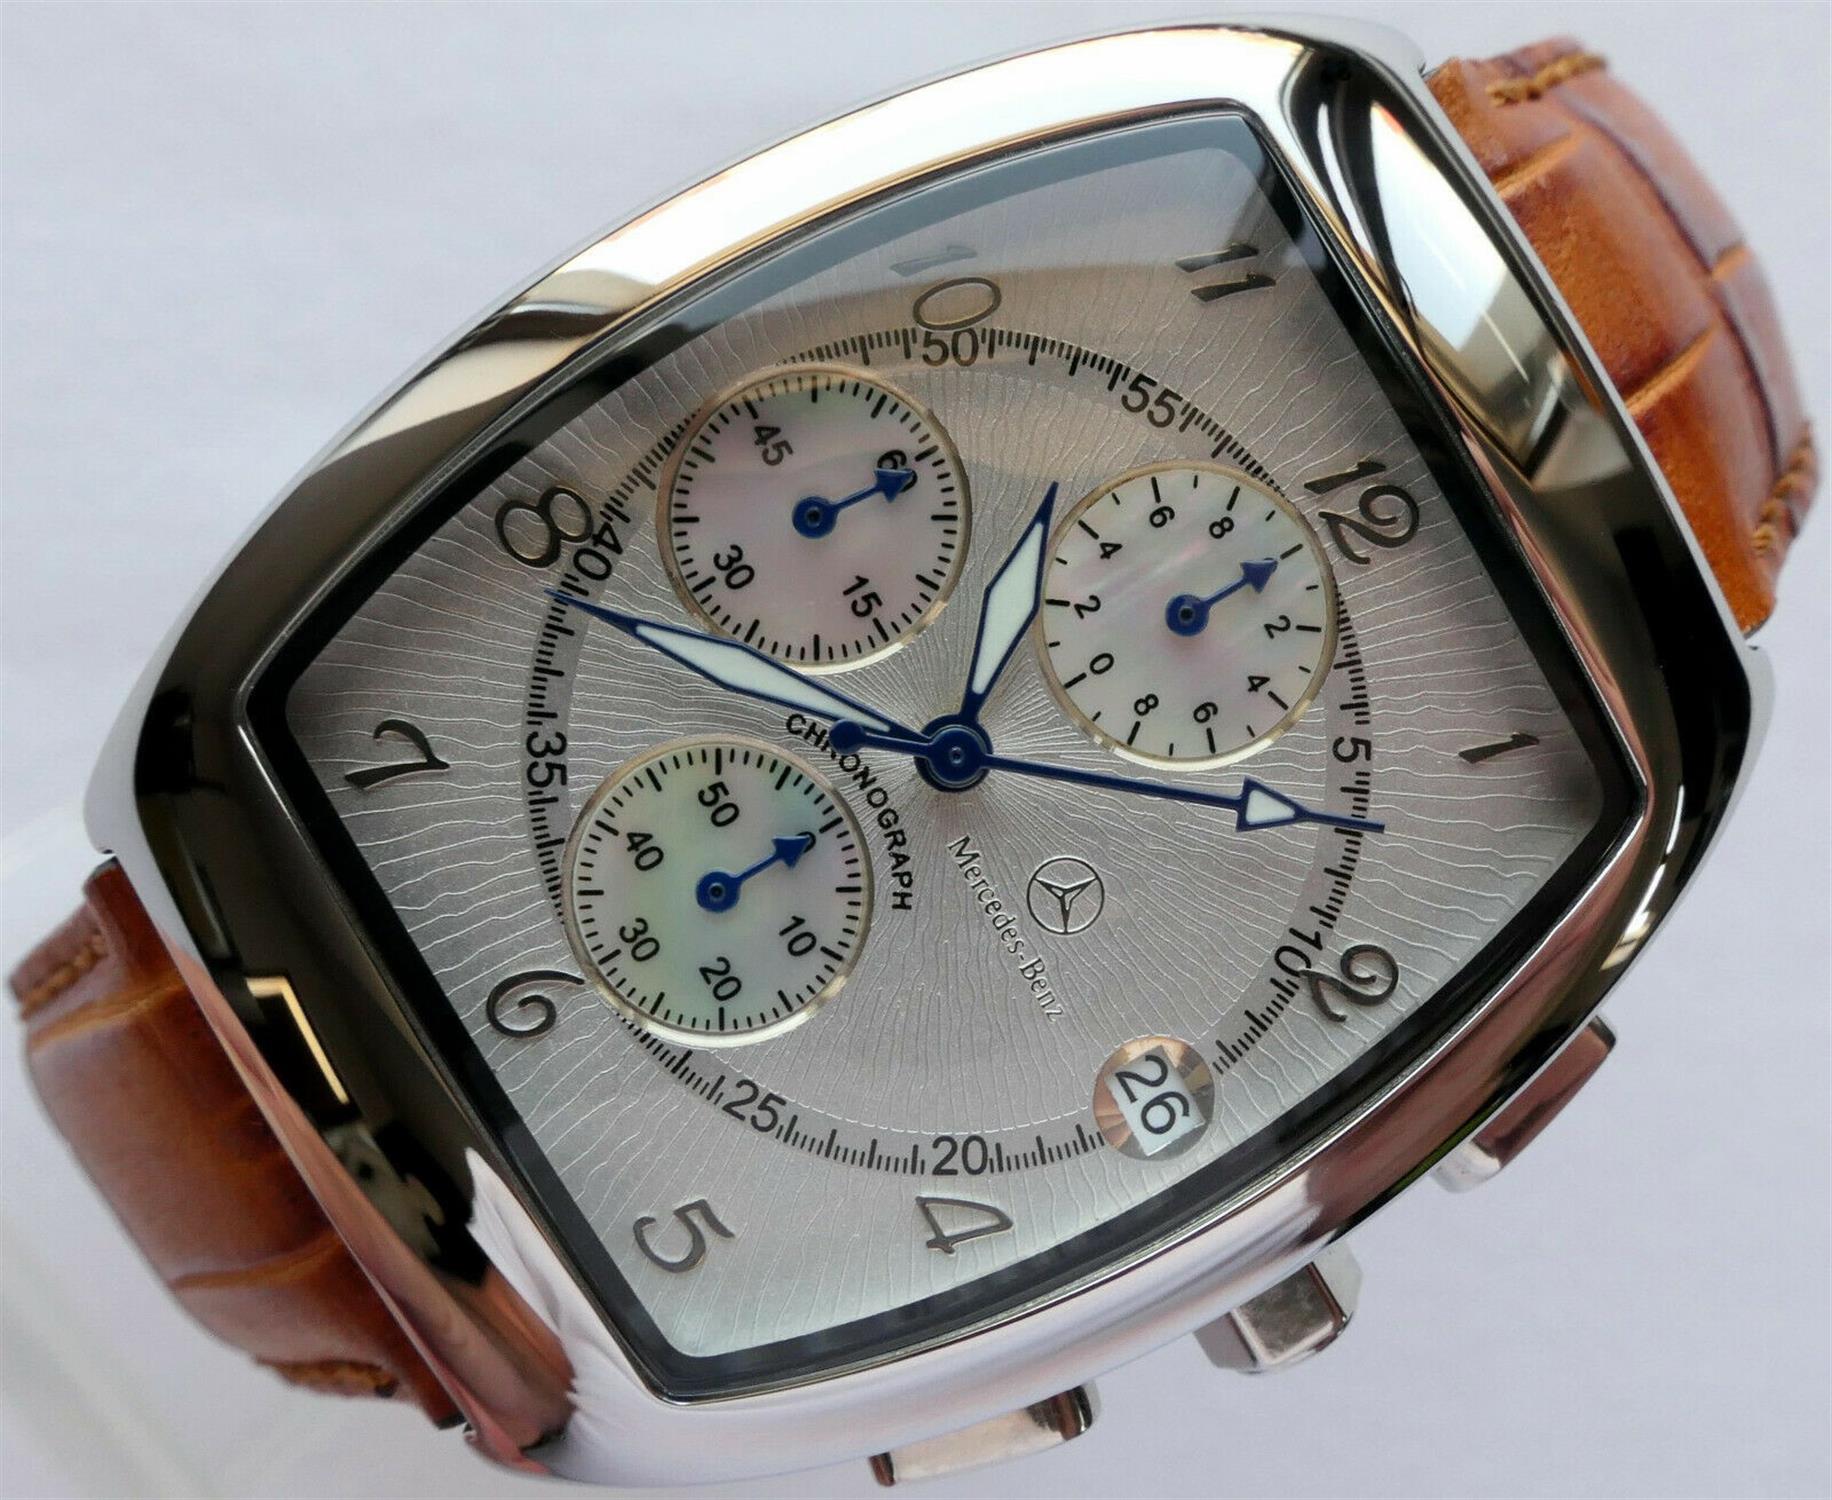 A Superb Mercedes-Benz Art-Deco Style Gentleman’s Chronograph Wristwatch - Image 5 of 9